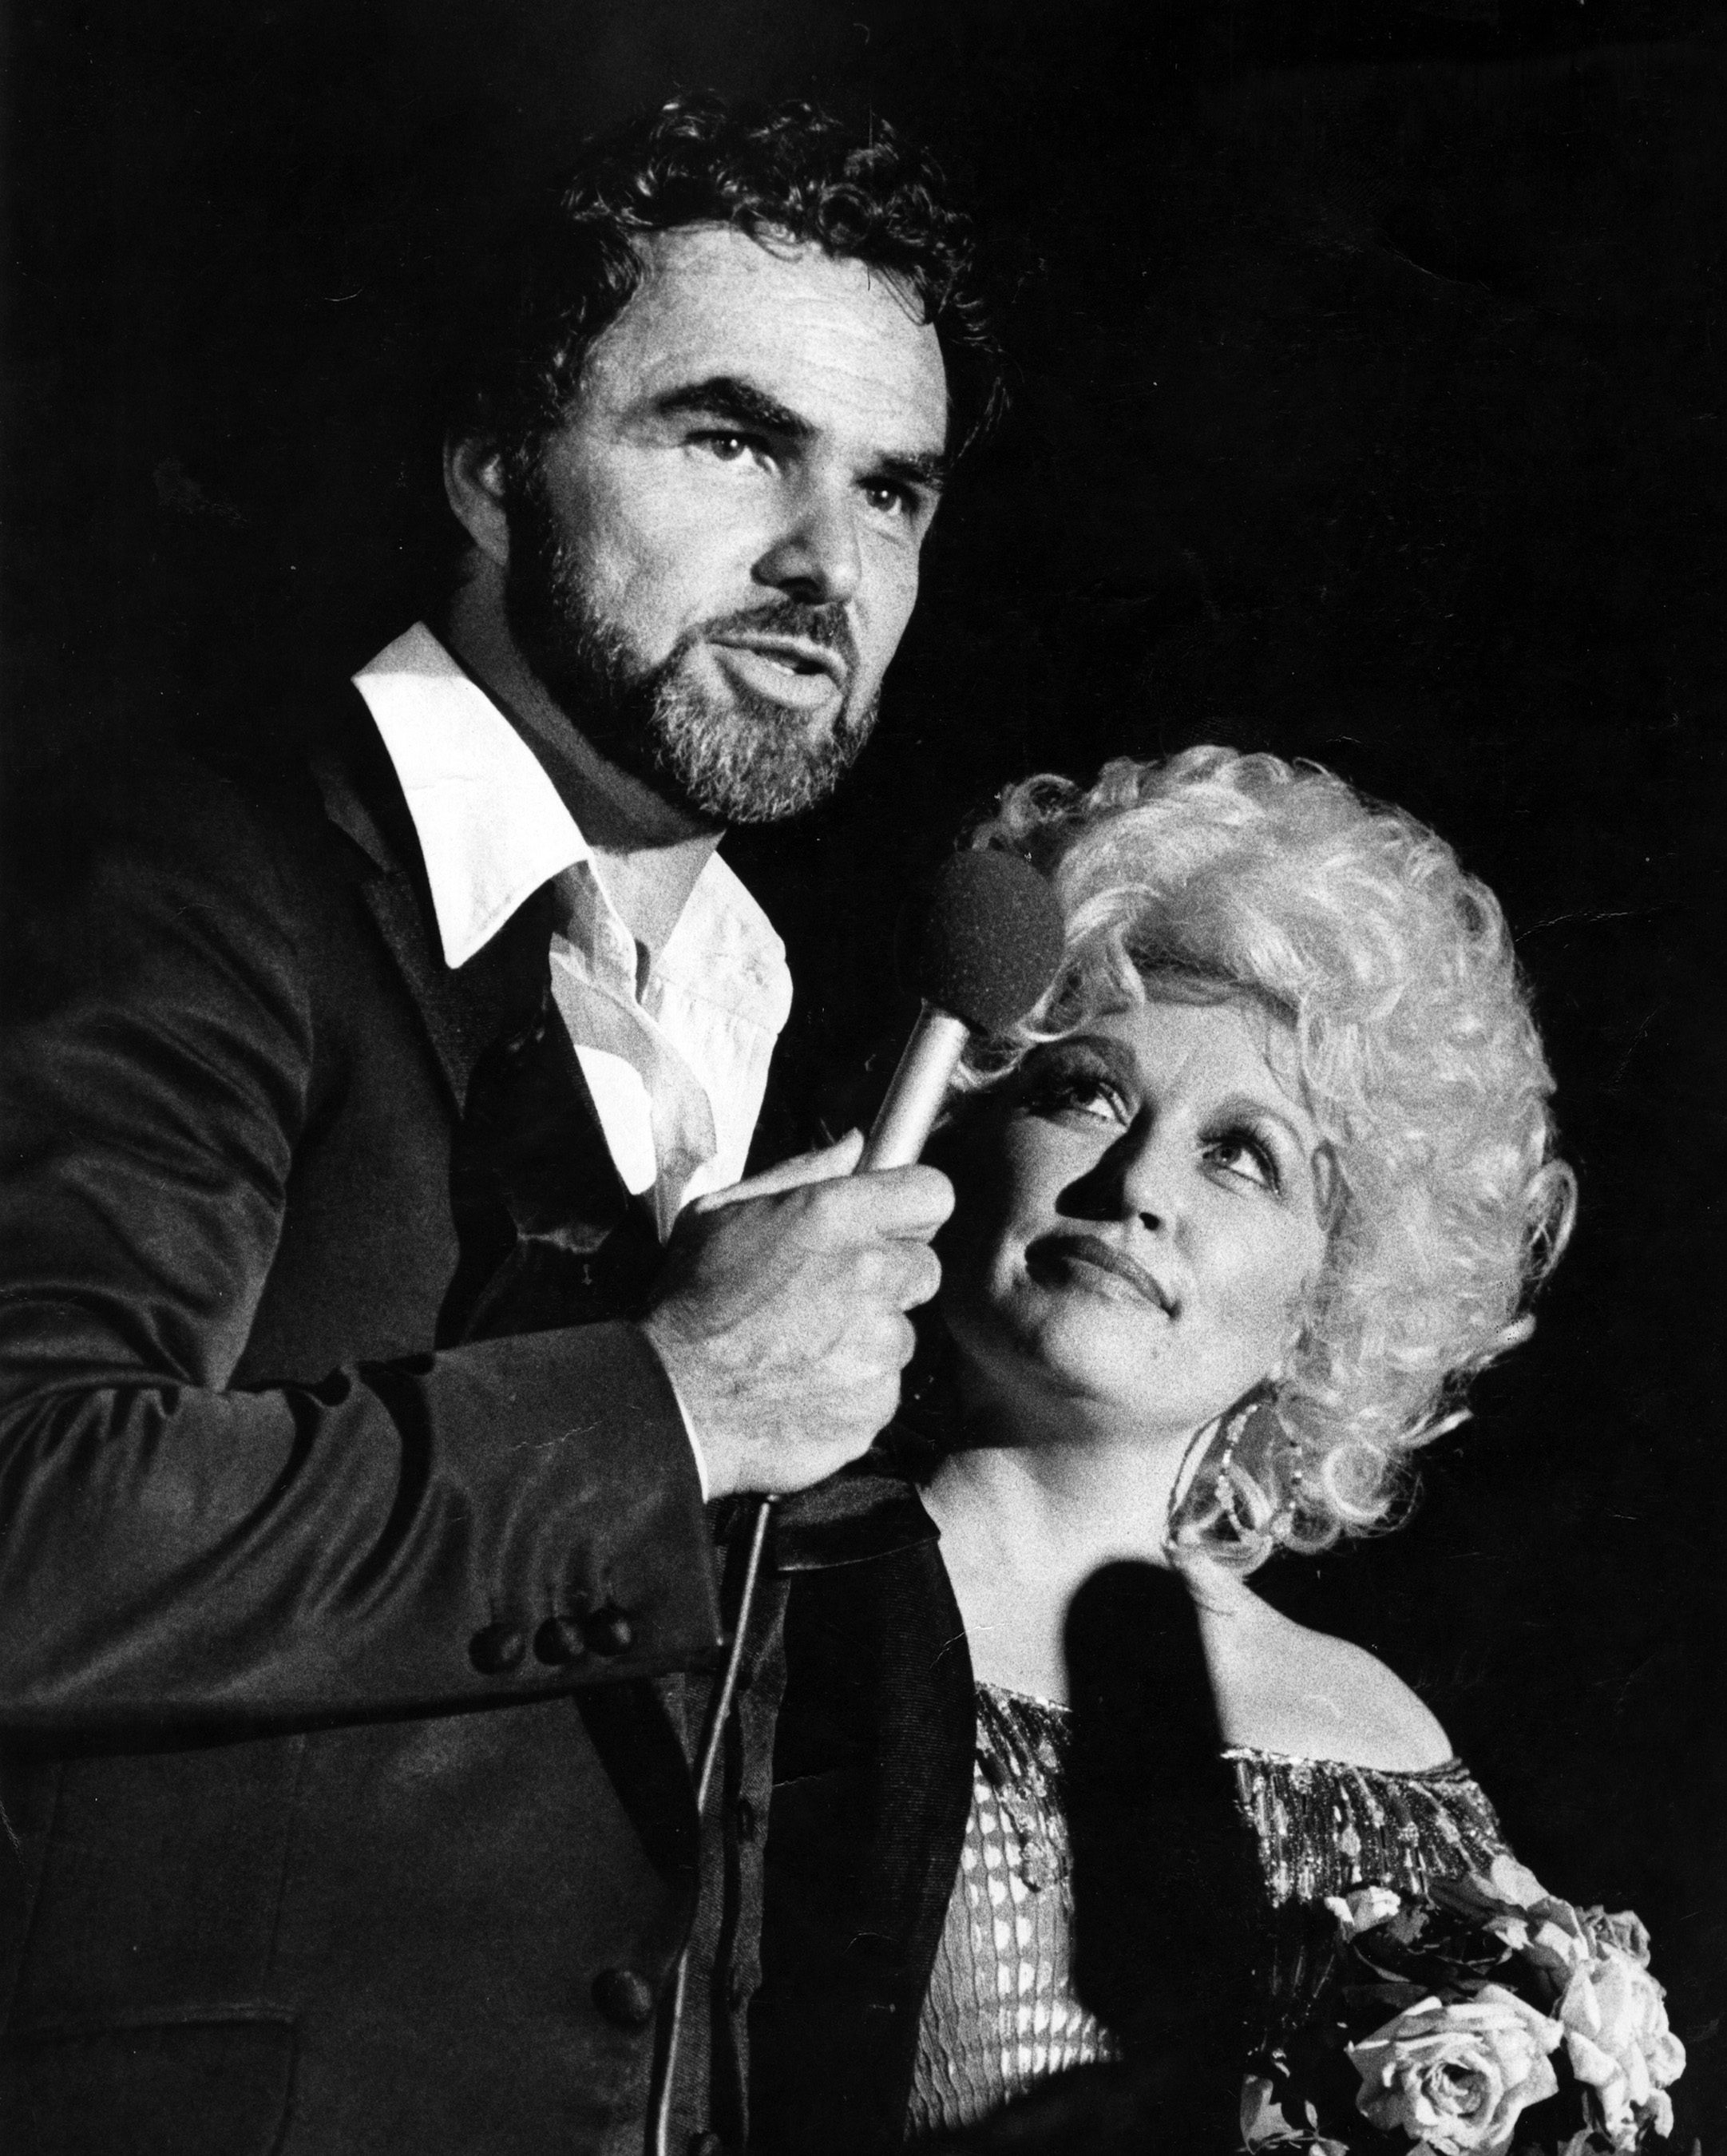 Burt Reynolds and Dolly Parton at Burt Reynolds Theater on July 15, 1982